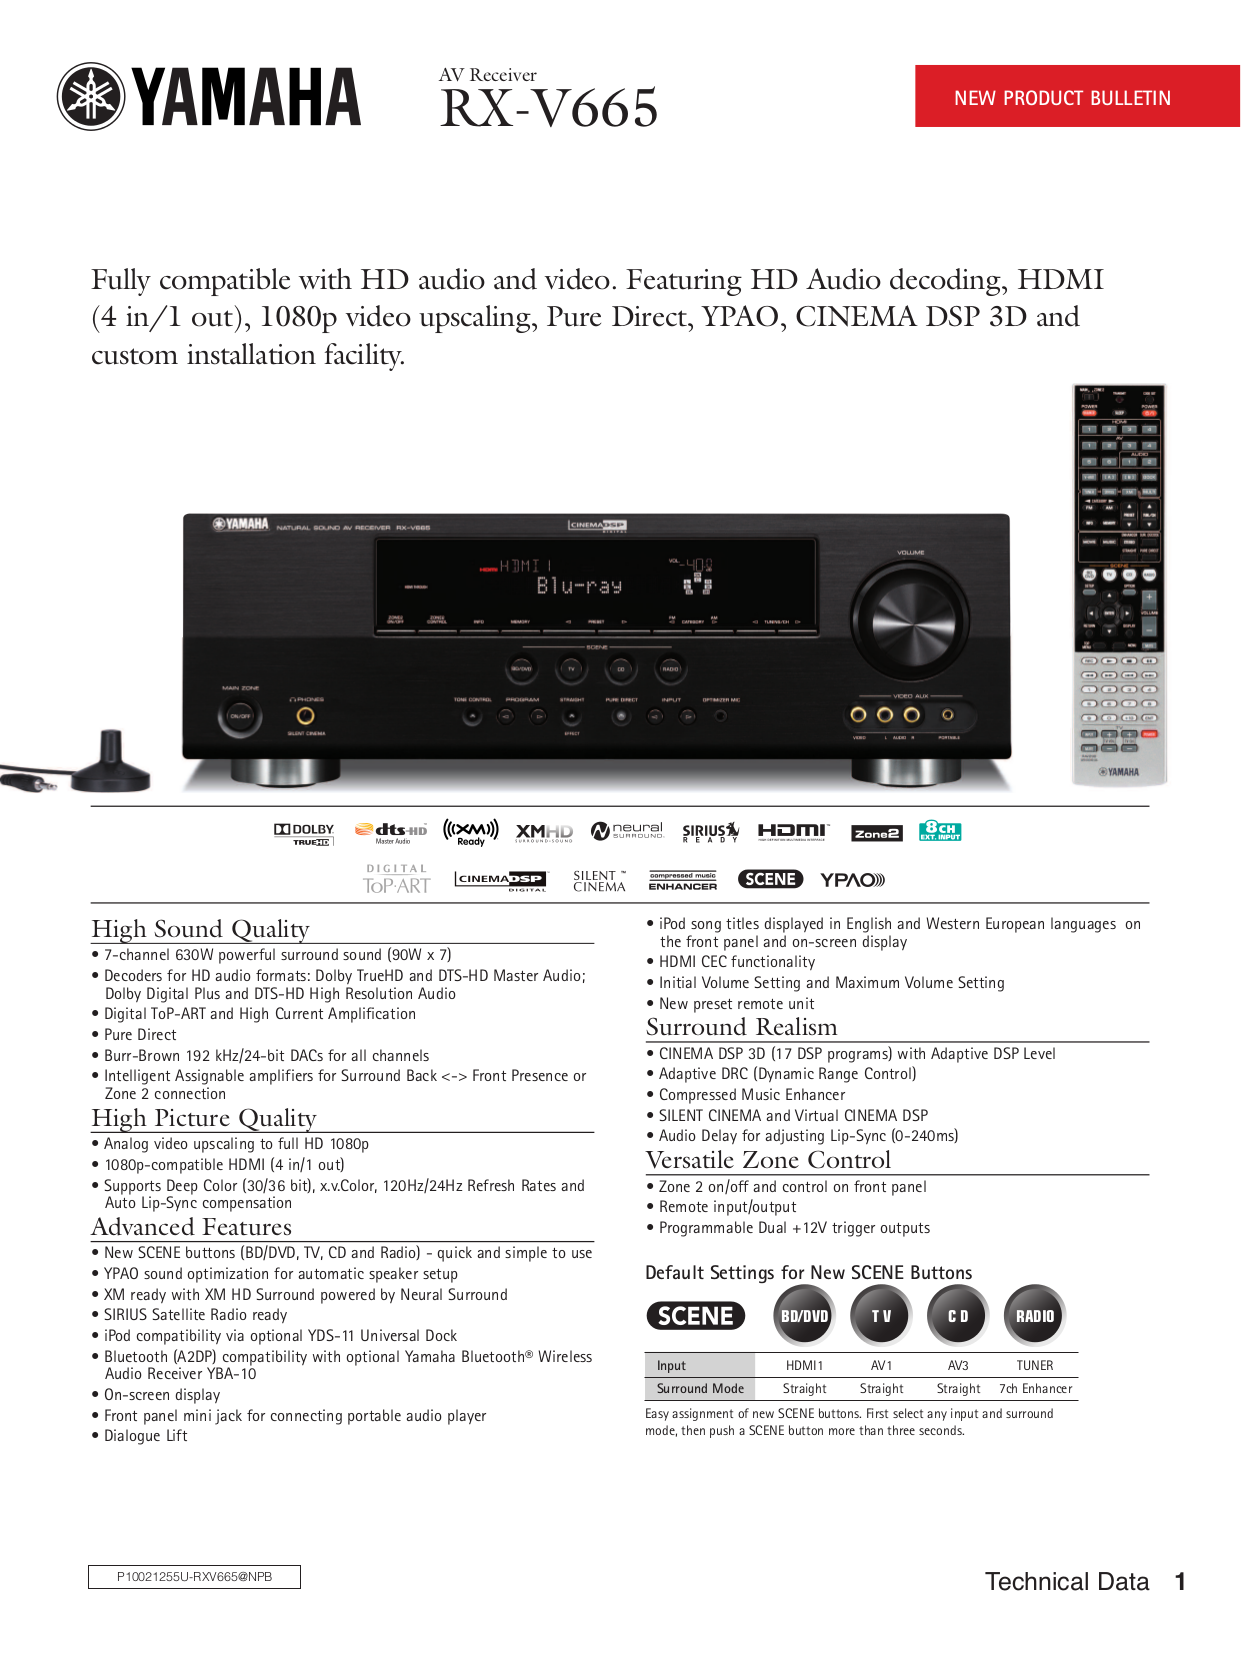 Download free pdf for Yamaha RX-V665 Receiver manual